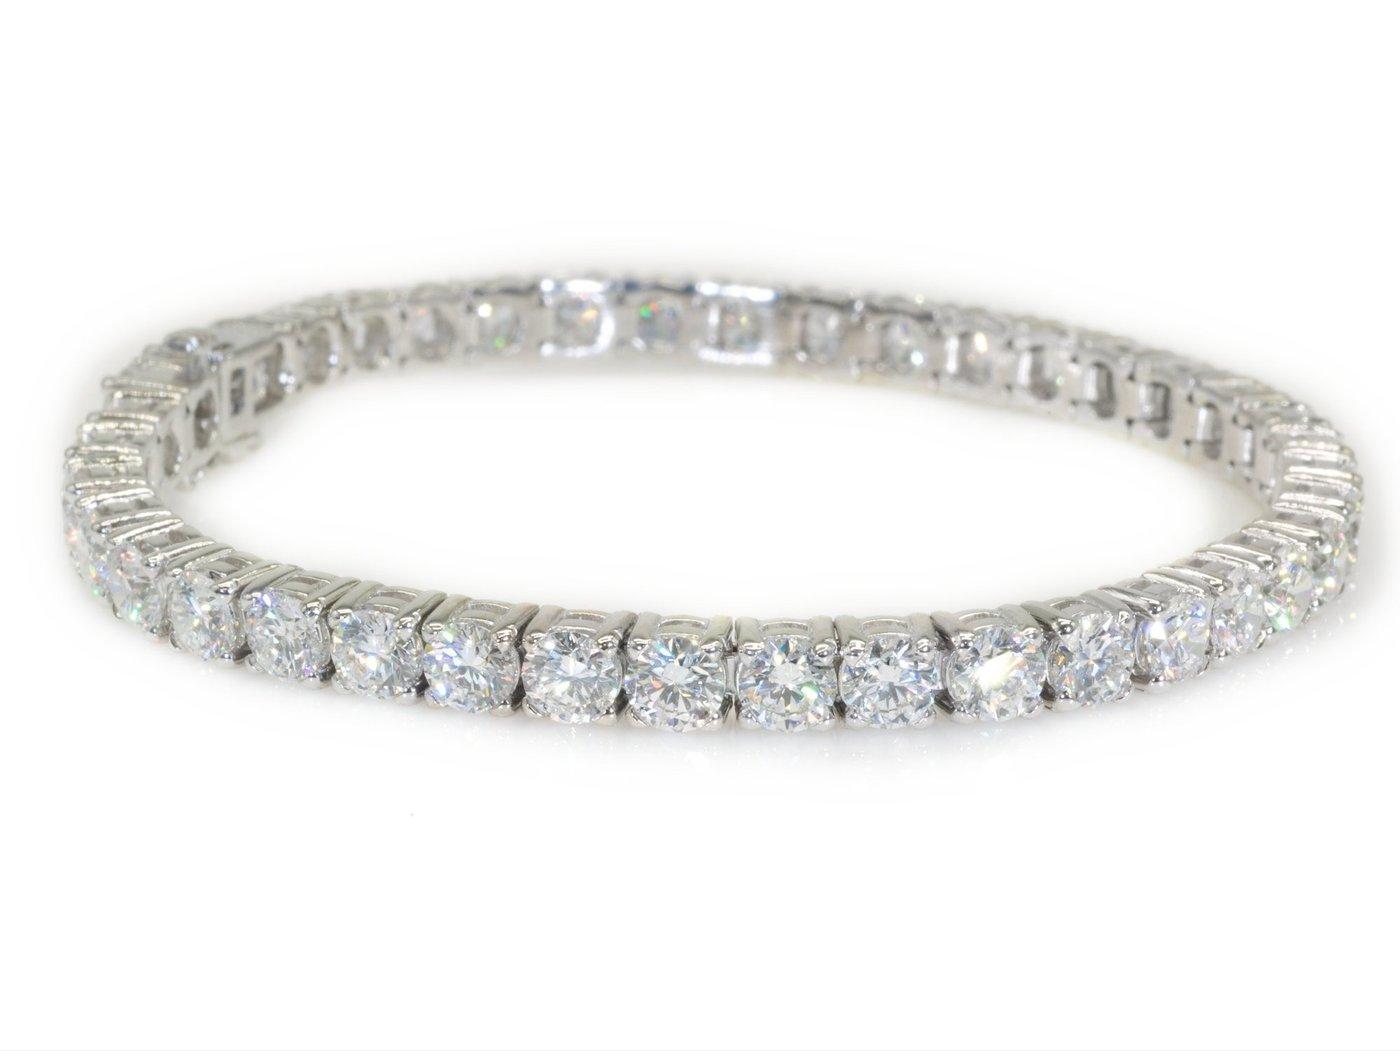 Women's Luxurious 18k White Gold Bracelet w/ 12.51 Ct Natural Diamonds, GIA Certificate For Sale